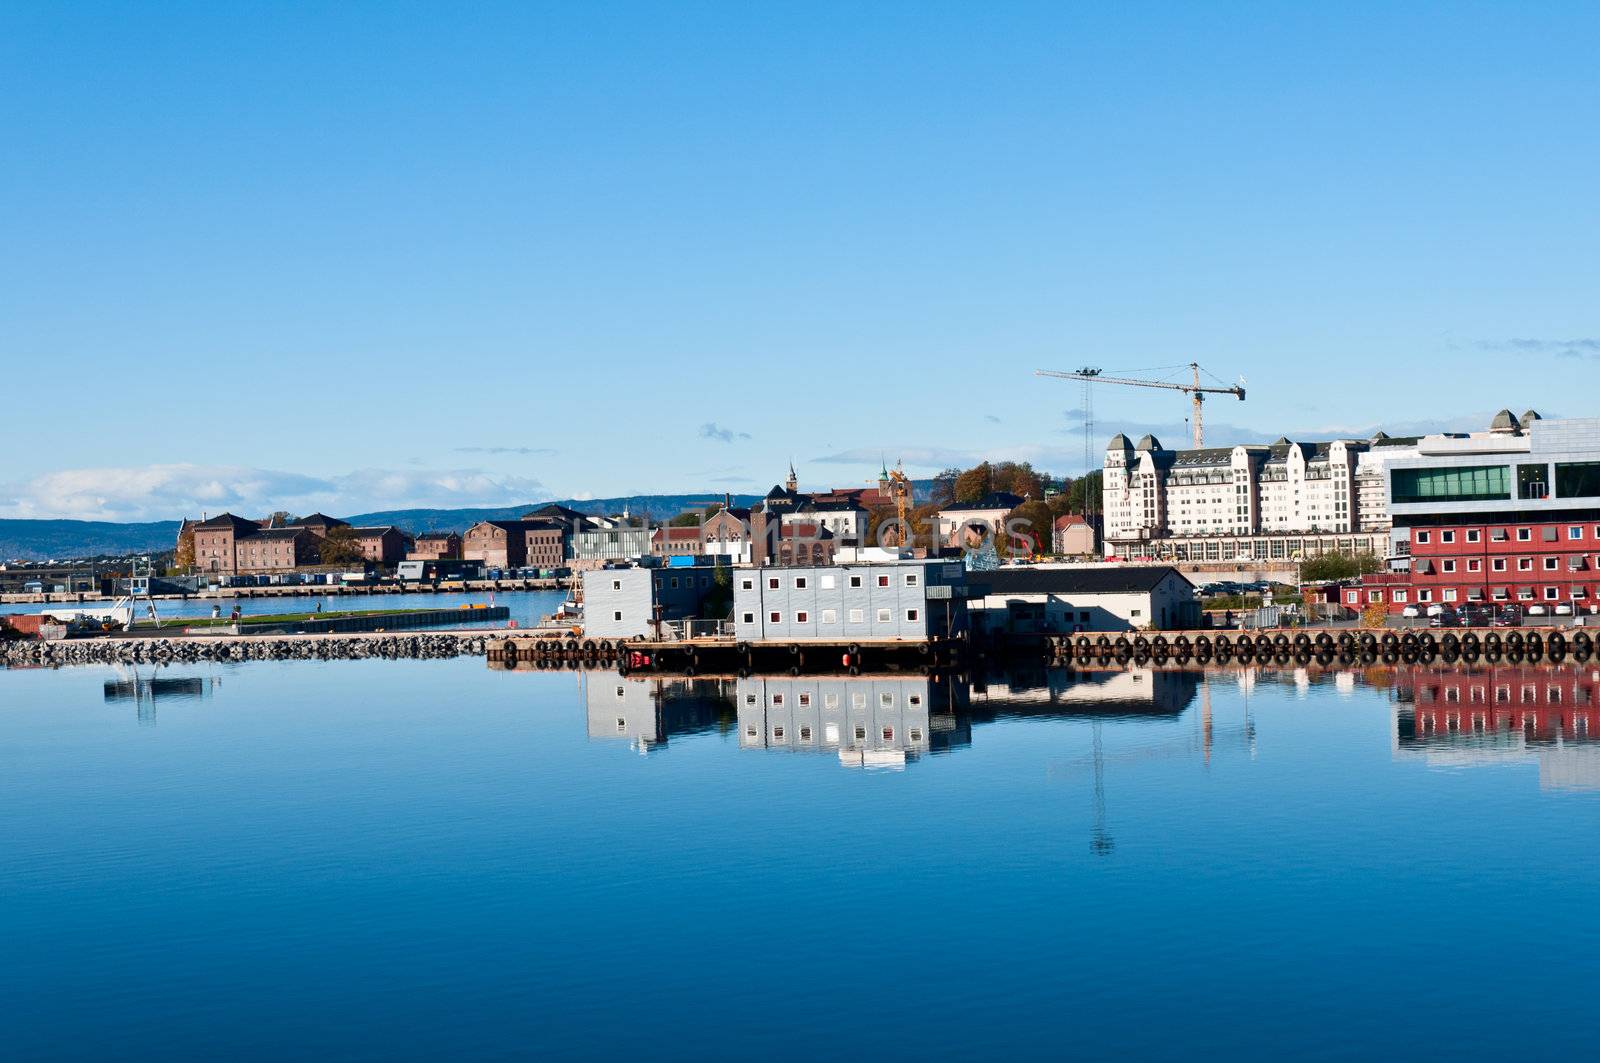 Not used harbor in Oslo Norway